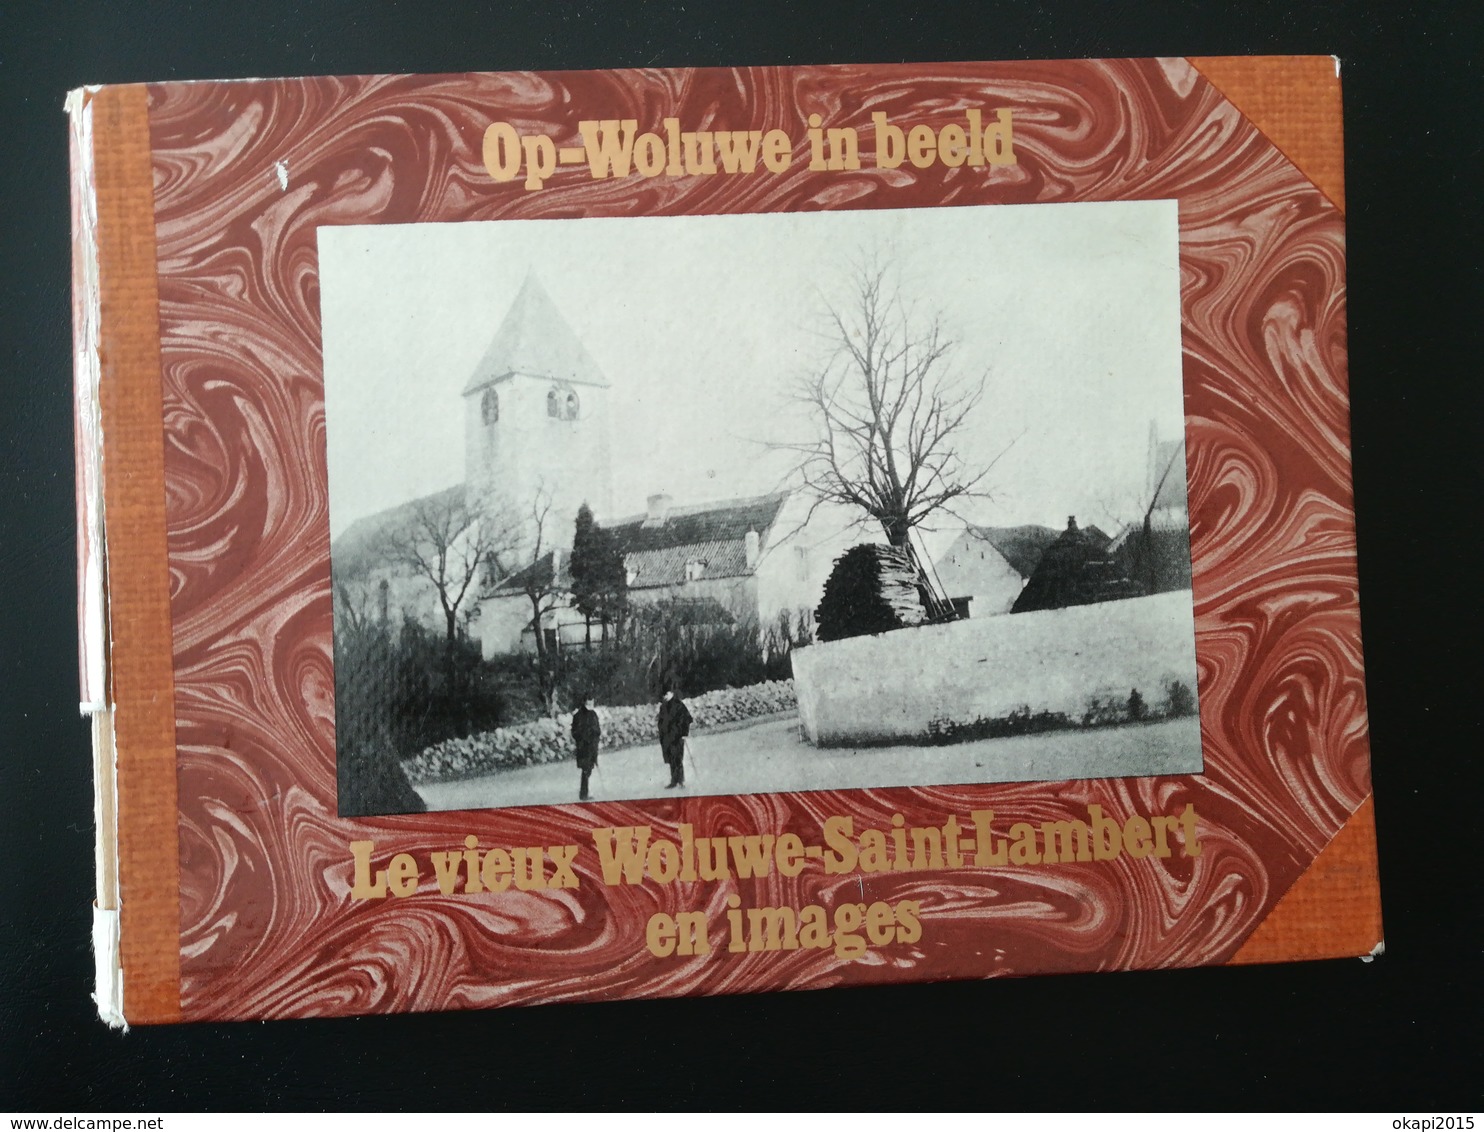 OP WOLUWE IN BEELD LE VIEUX WOLUWE - SAINT -  LAMBERT EN IMAGES LIVRE BOEK ANNÉE 1972 CARTES POSTALES PHOTOS - Belgio